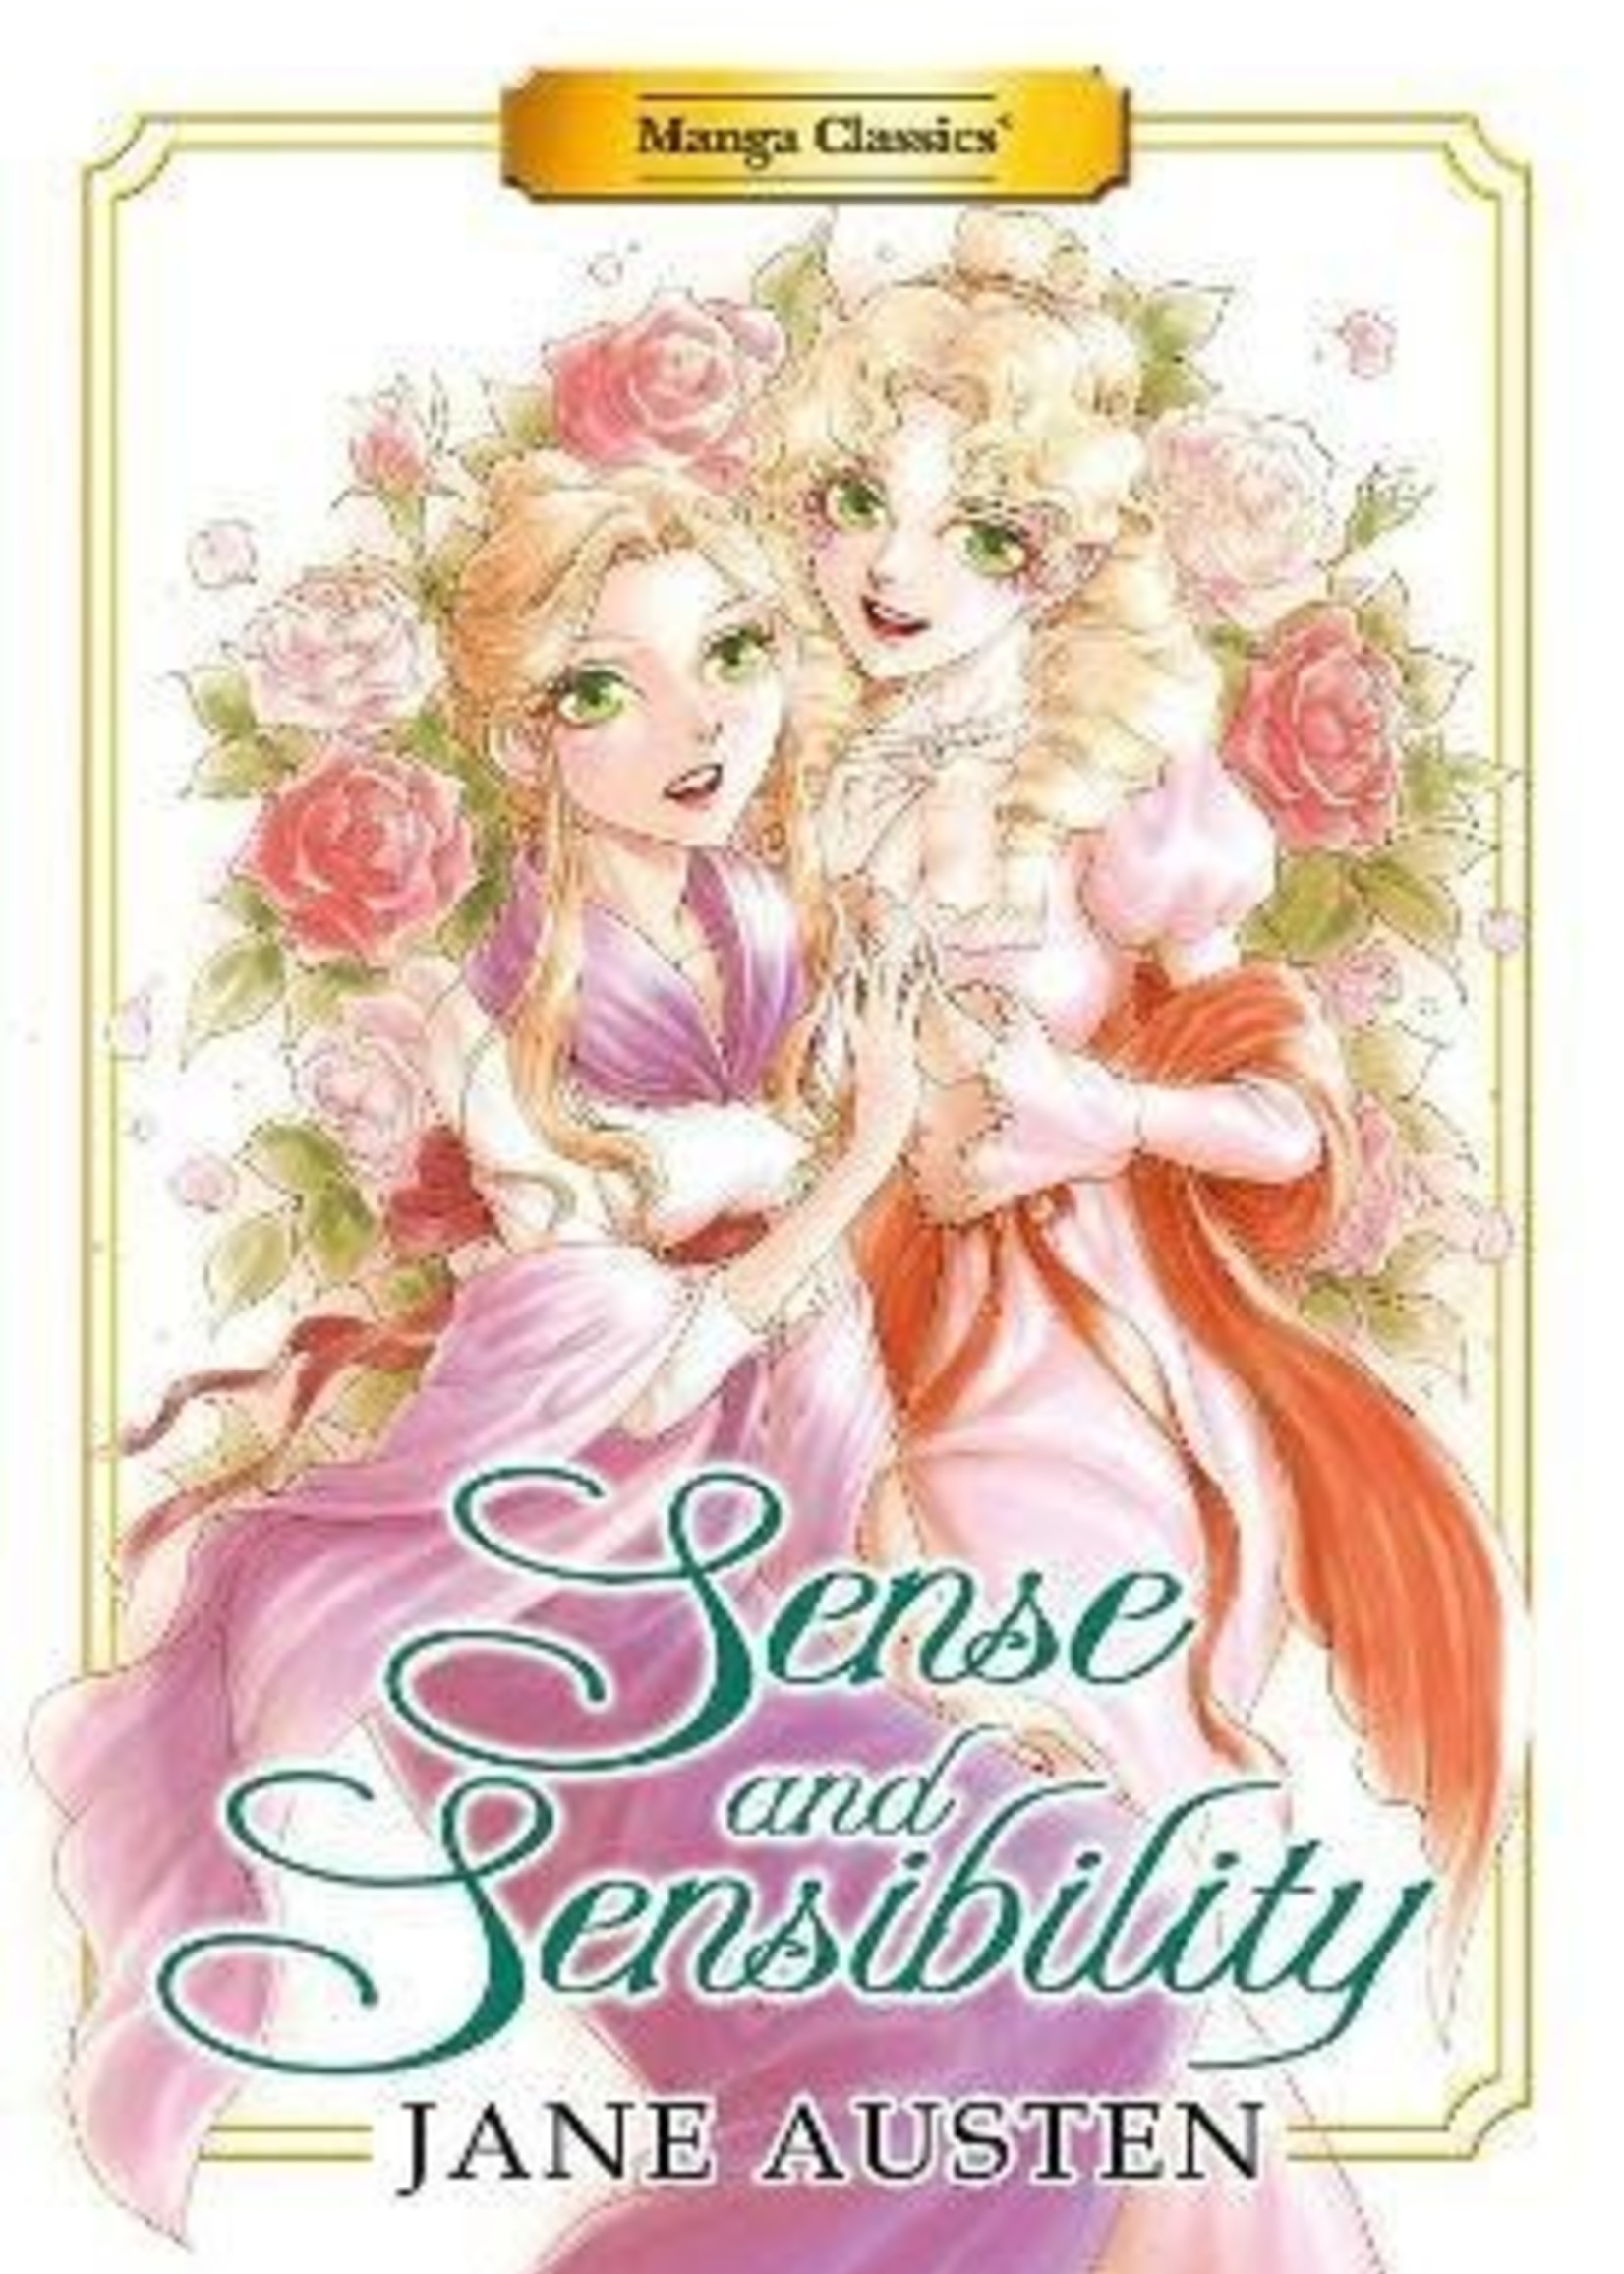 Sense and Sensibility (Manga Classics) by Jane Austen, Stacey King, Po Tse